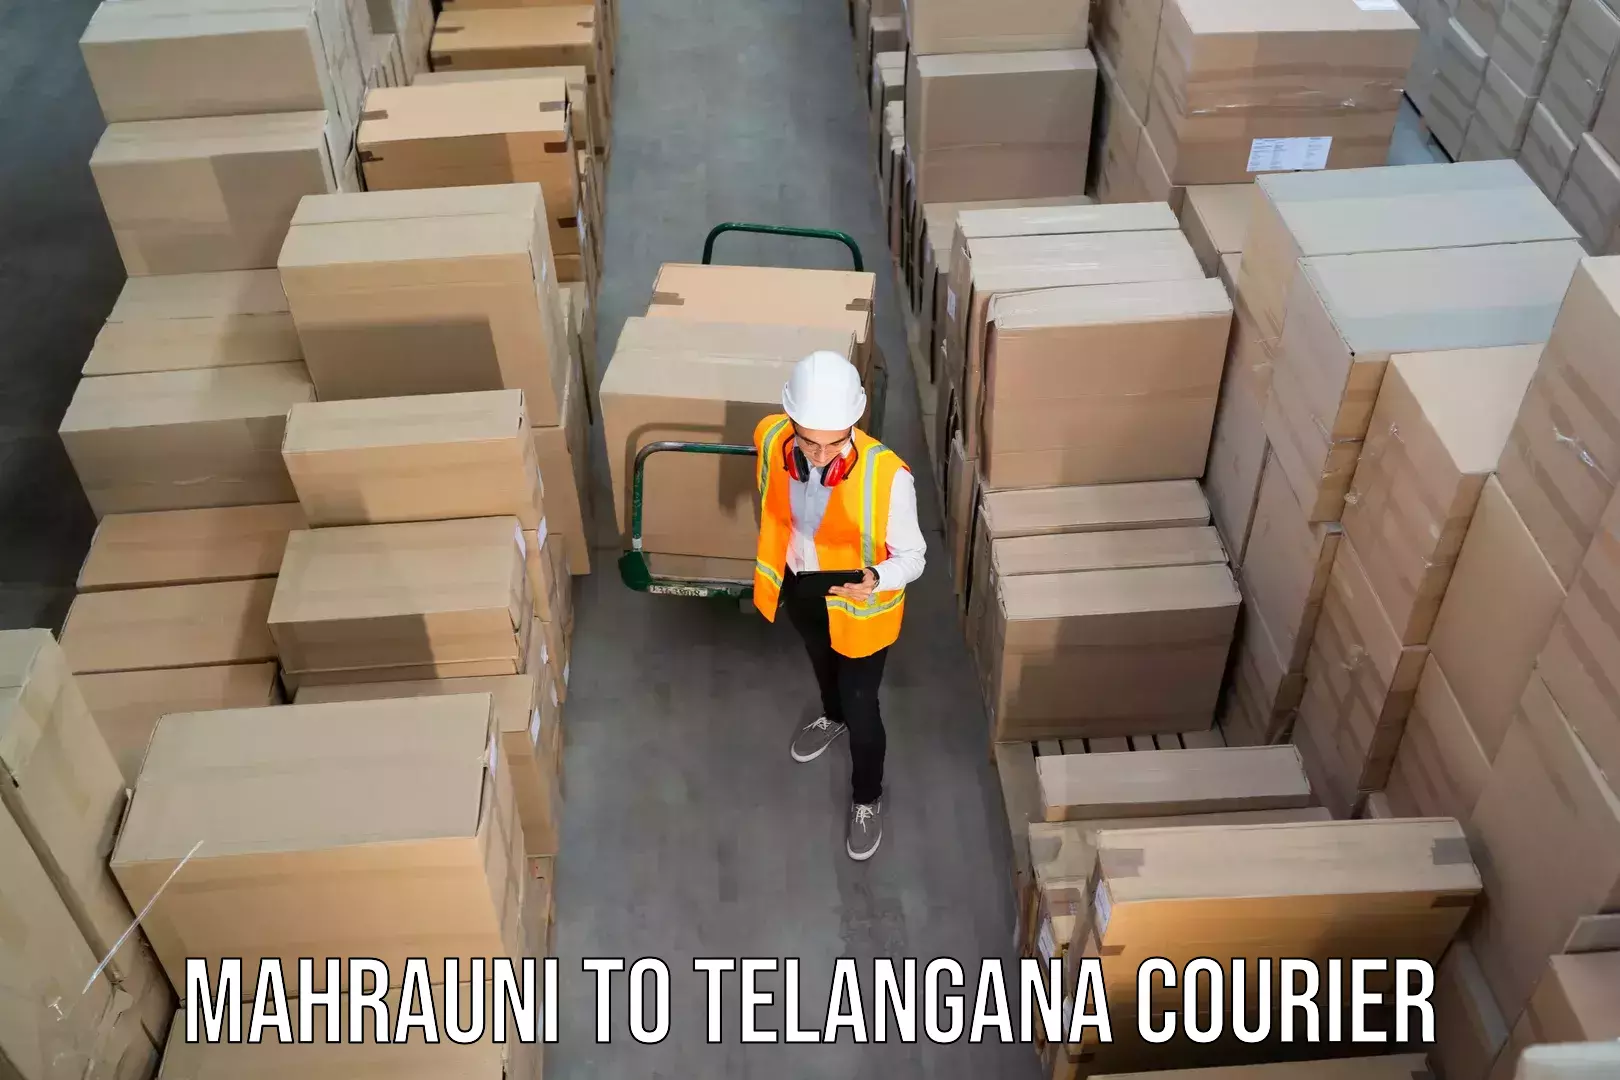 Courier app Mahrauni to Shadnagar